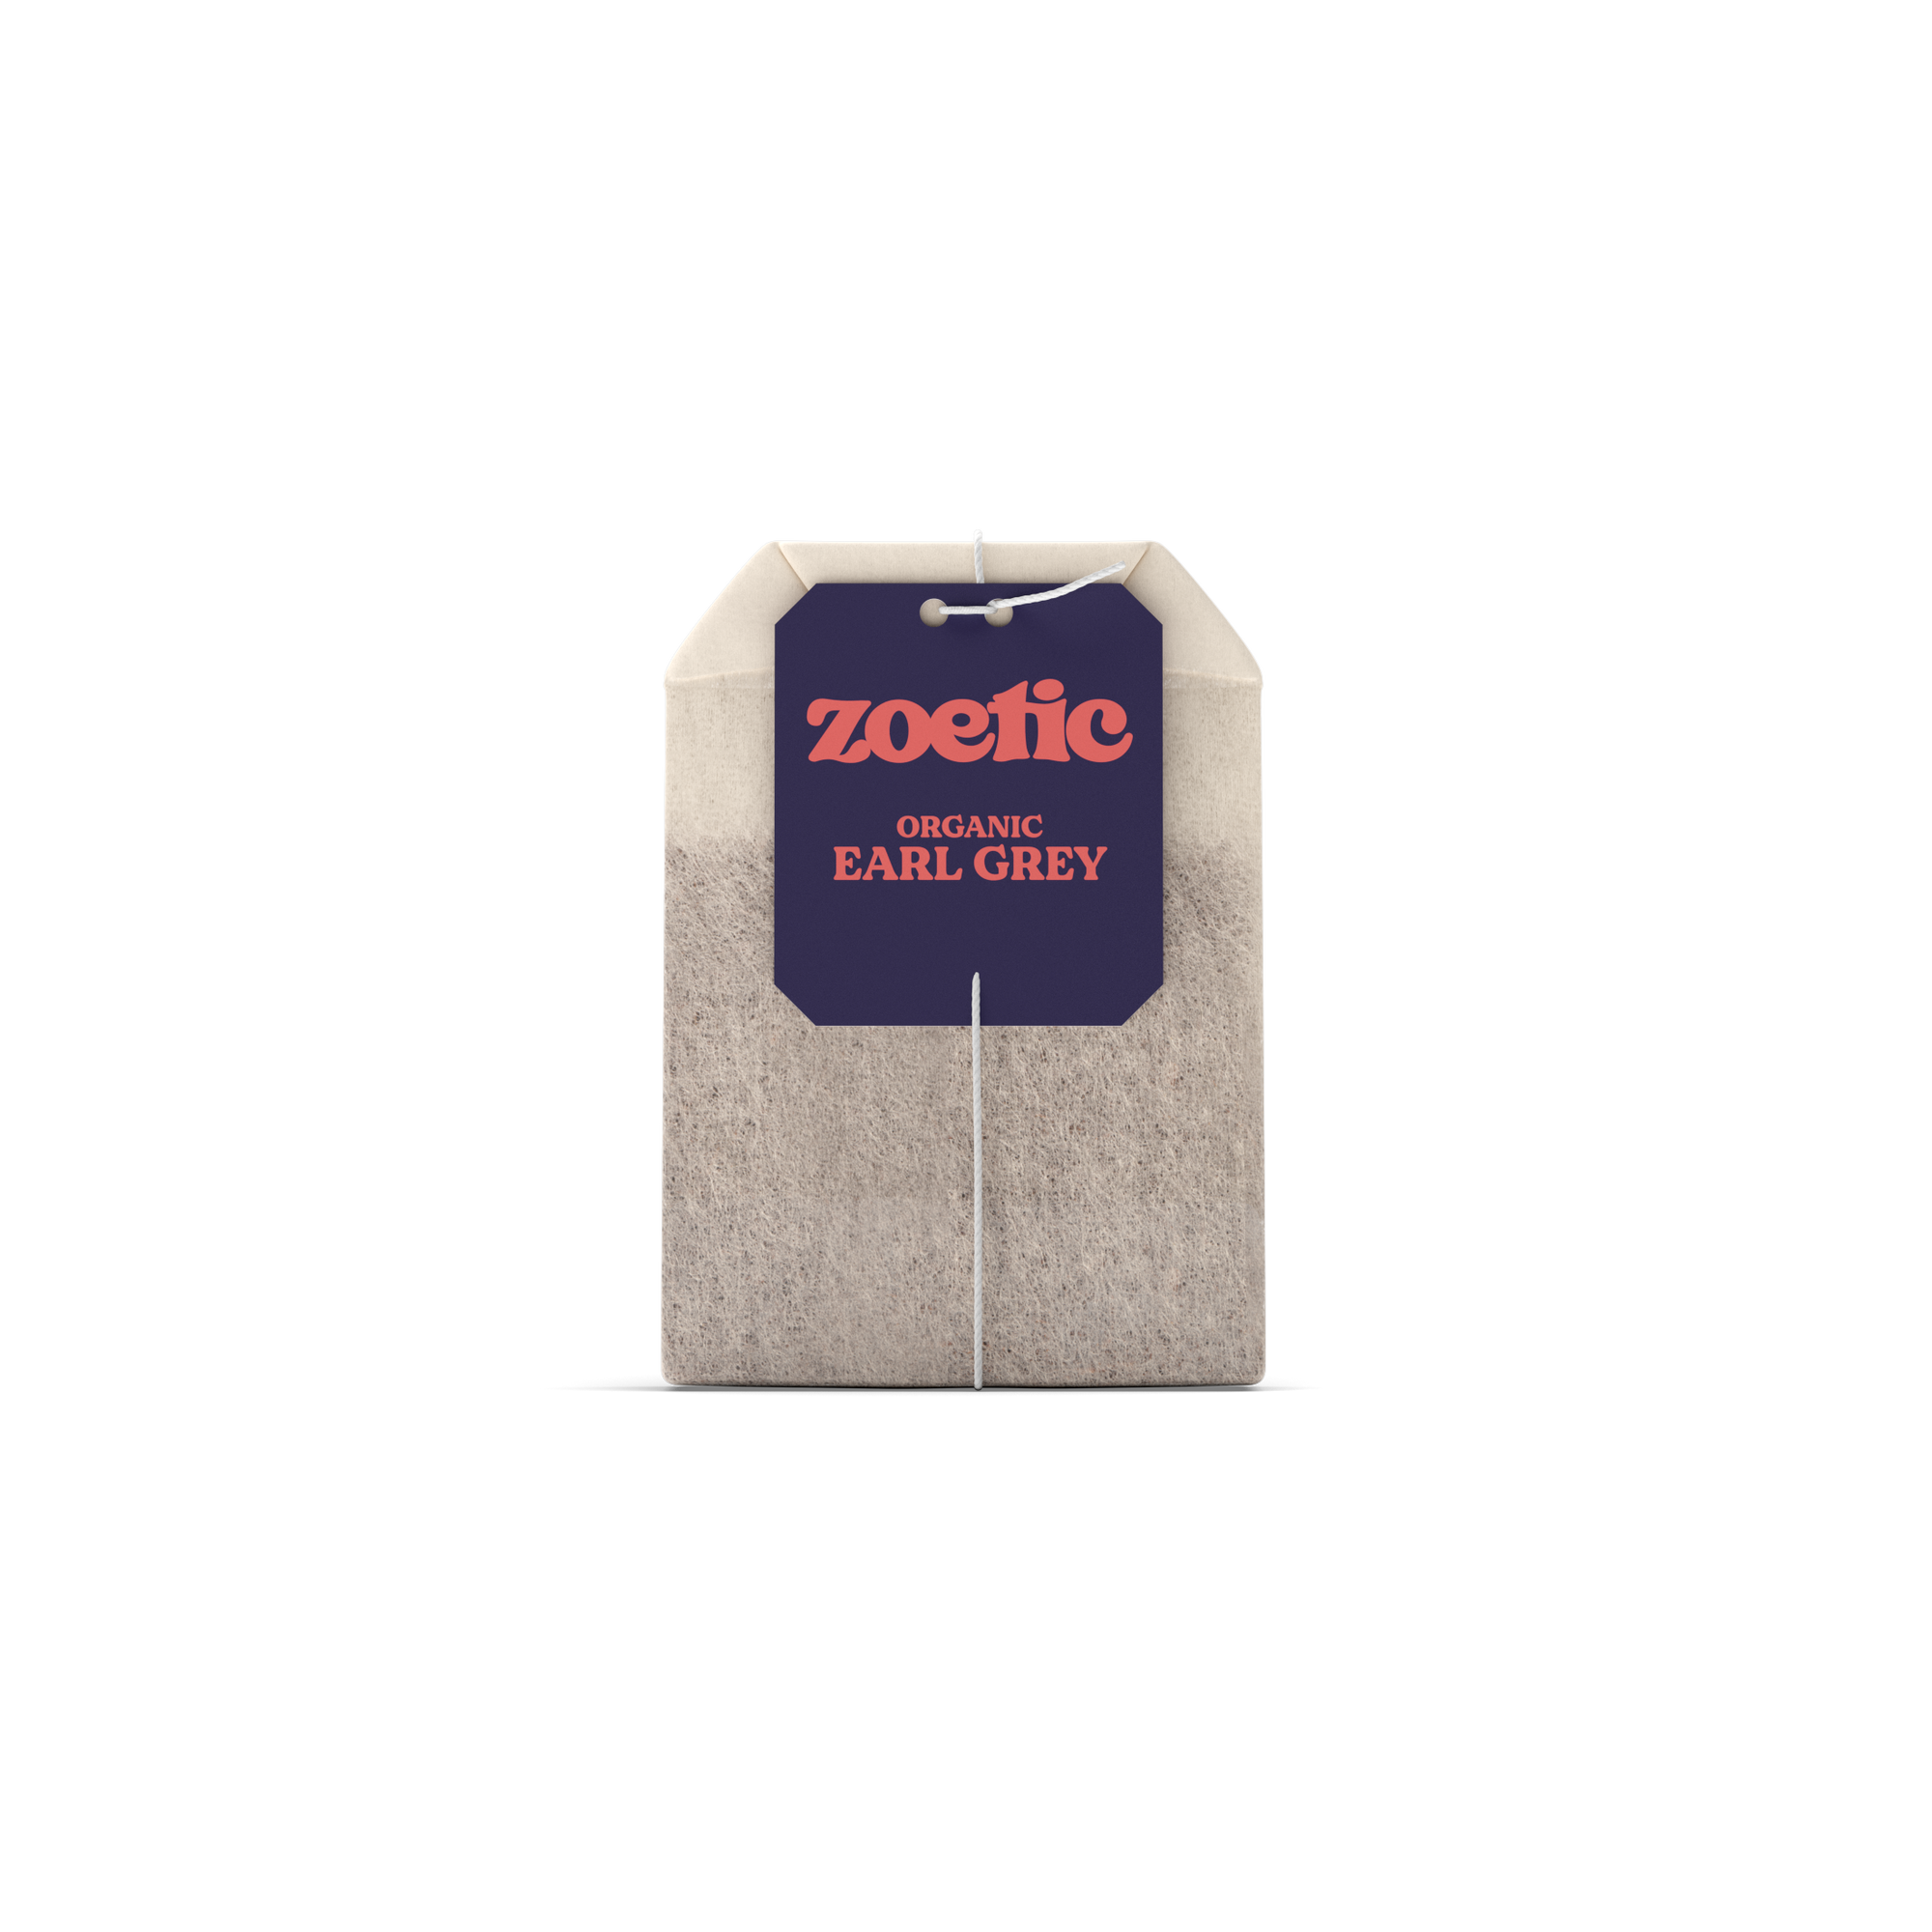 Zoetic Earl Grey Tea Bags